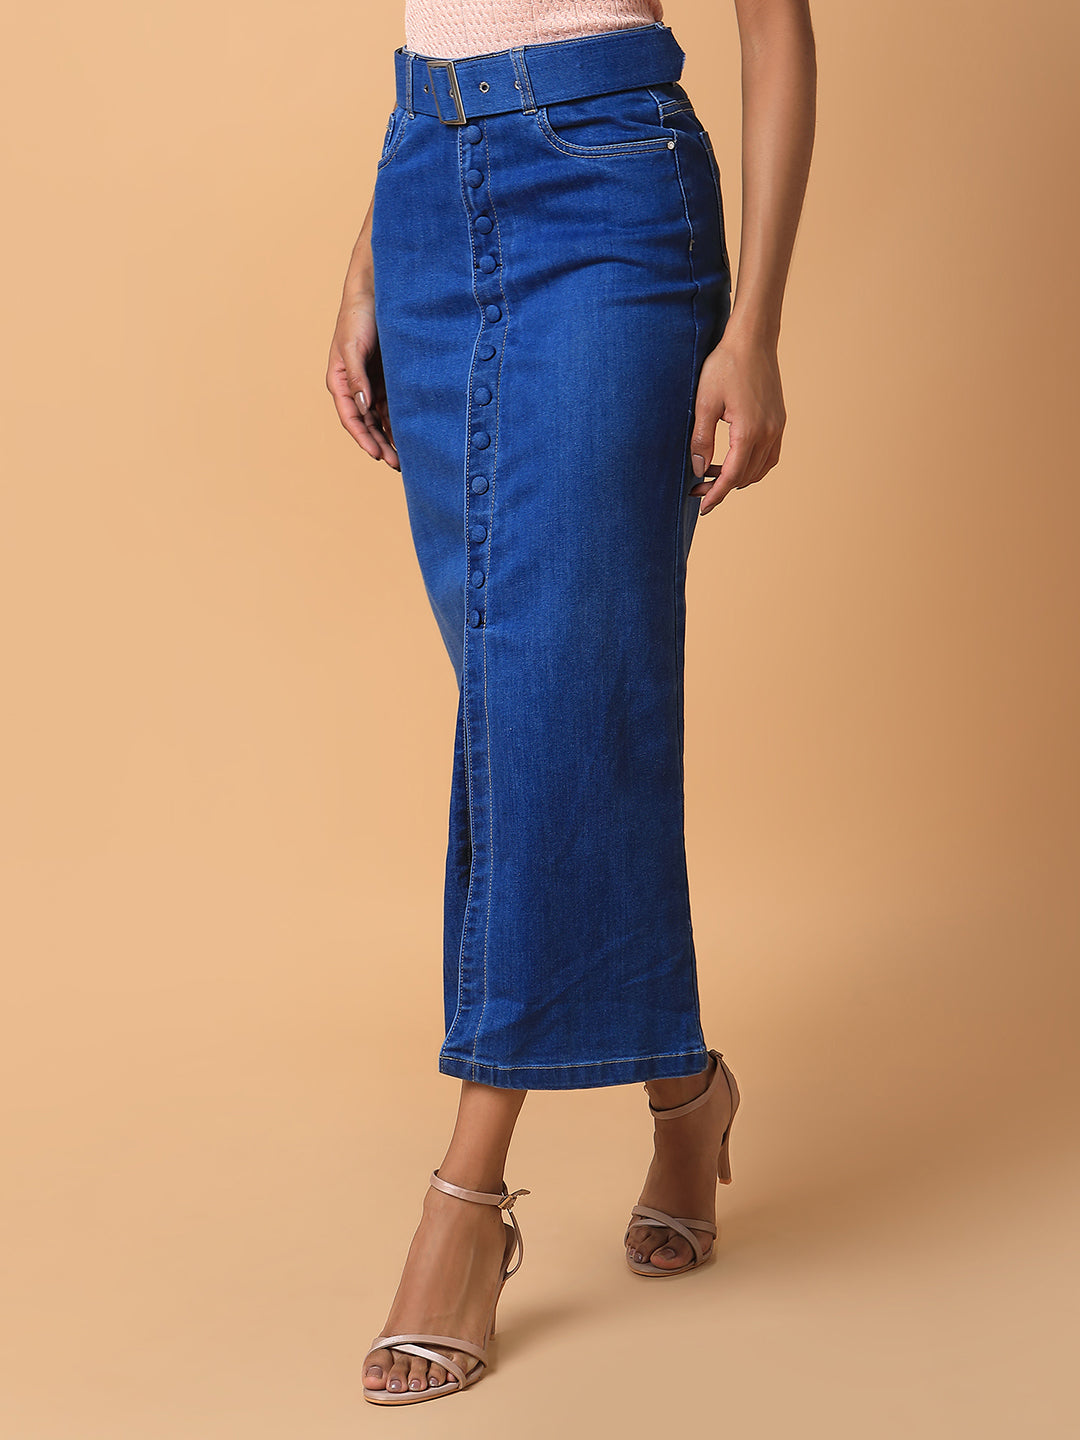 Women Solid Blue Straight Maxi Denim Skirt with Belt